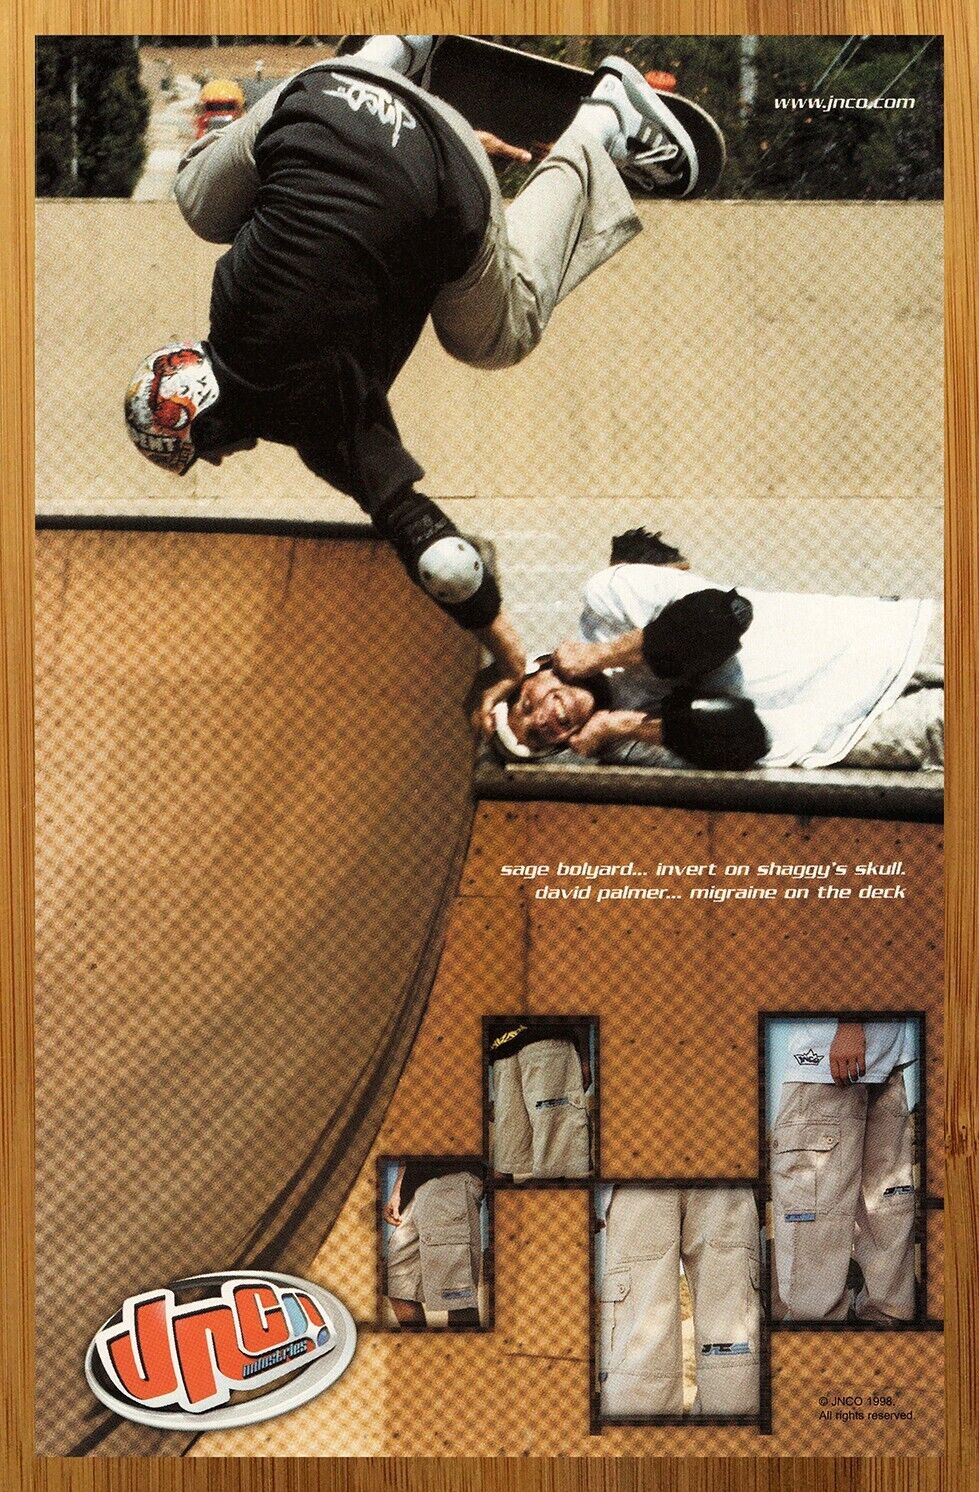 1998 JNCO Clothing Vintage Print Ad/Poster Sage Bolyard Skateboarding 90s Art